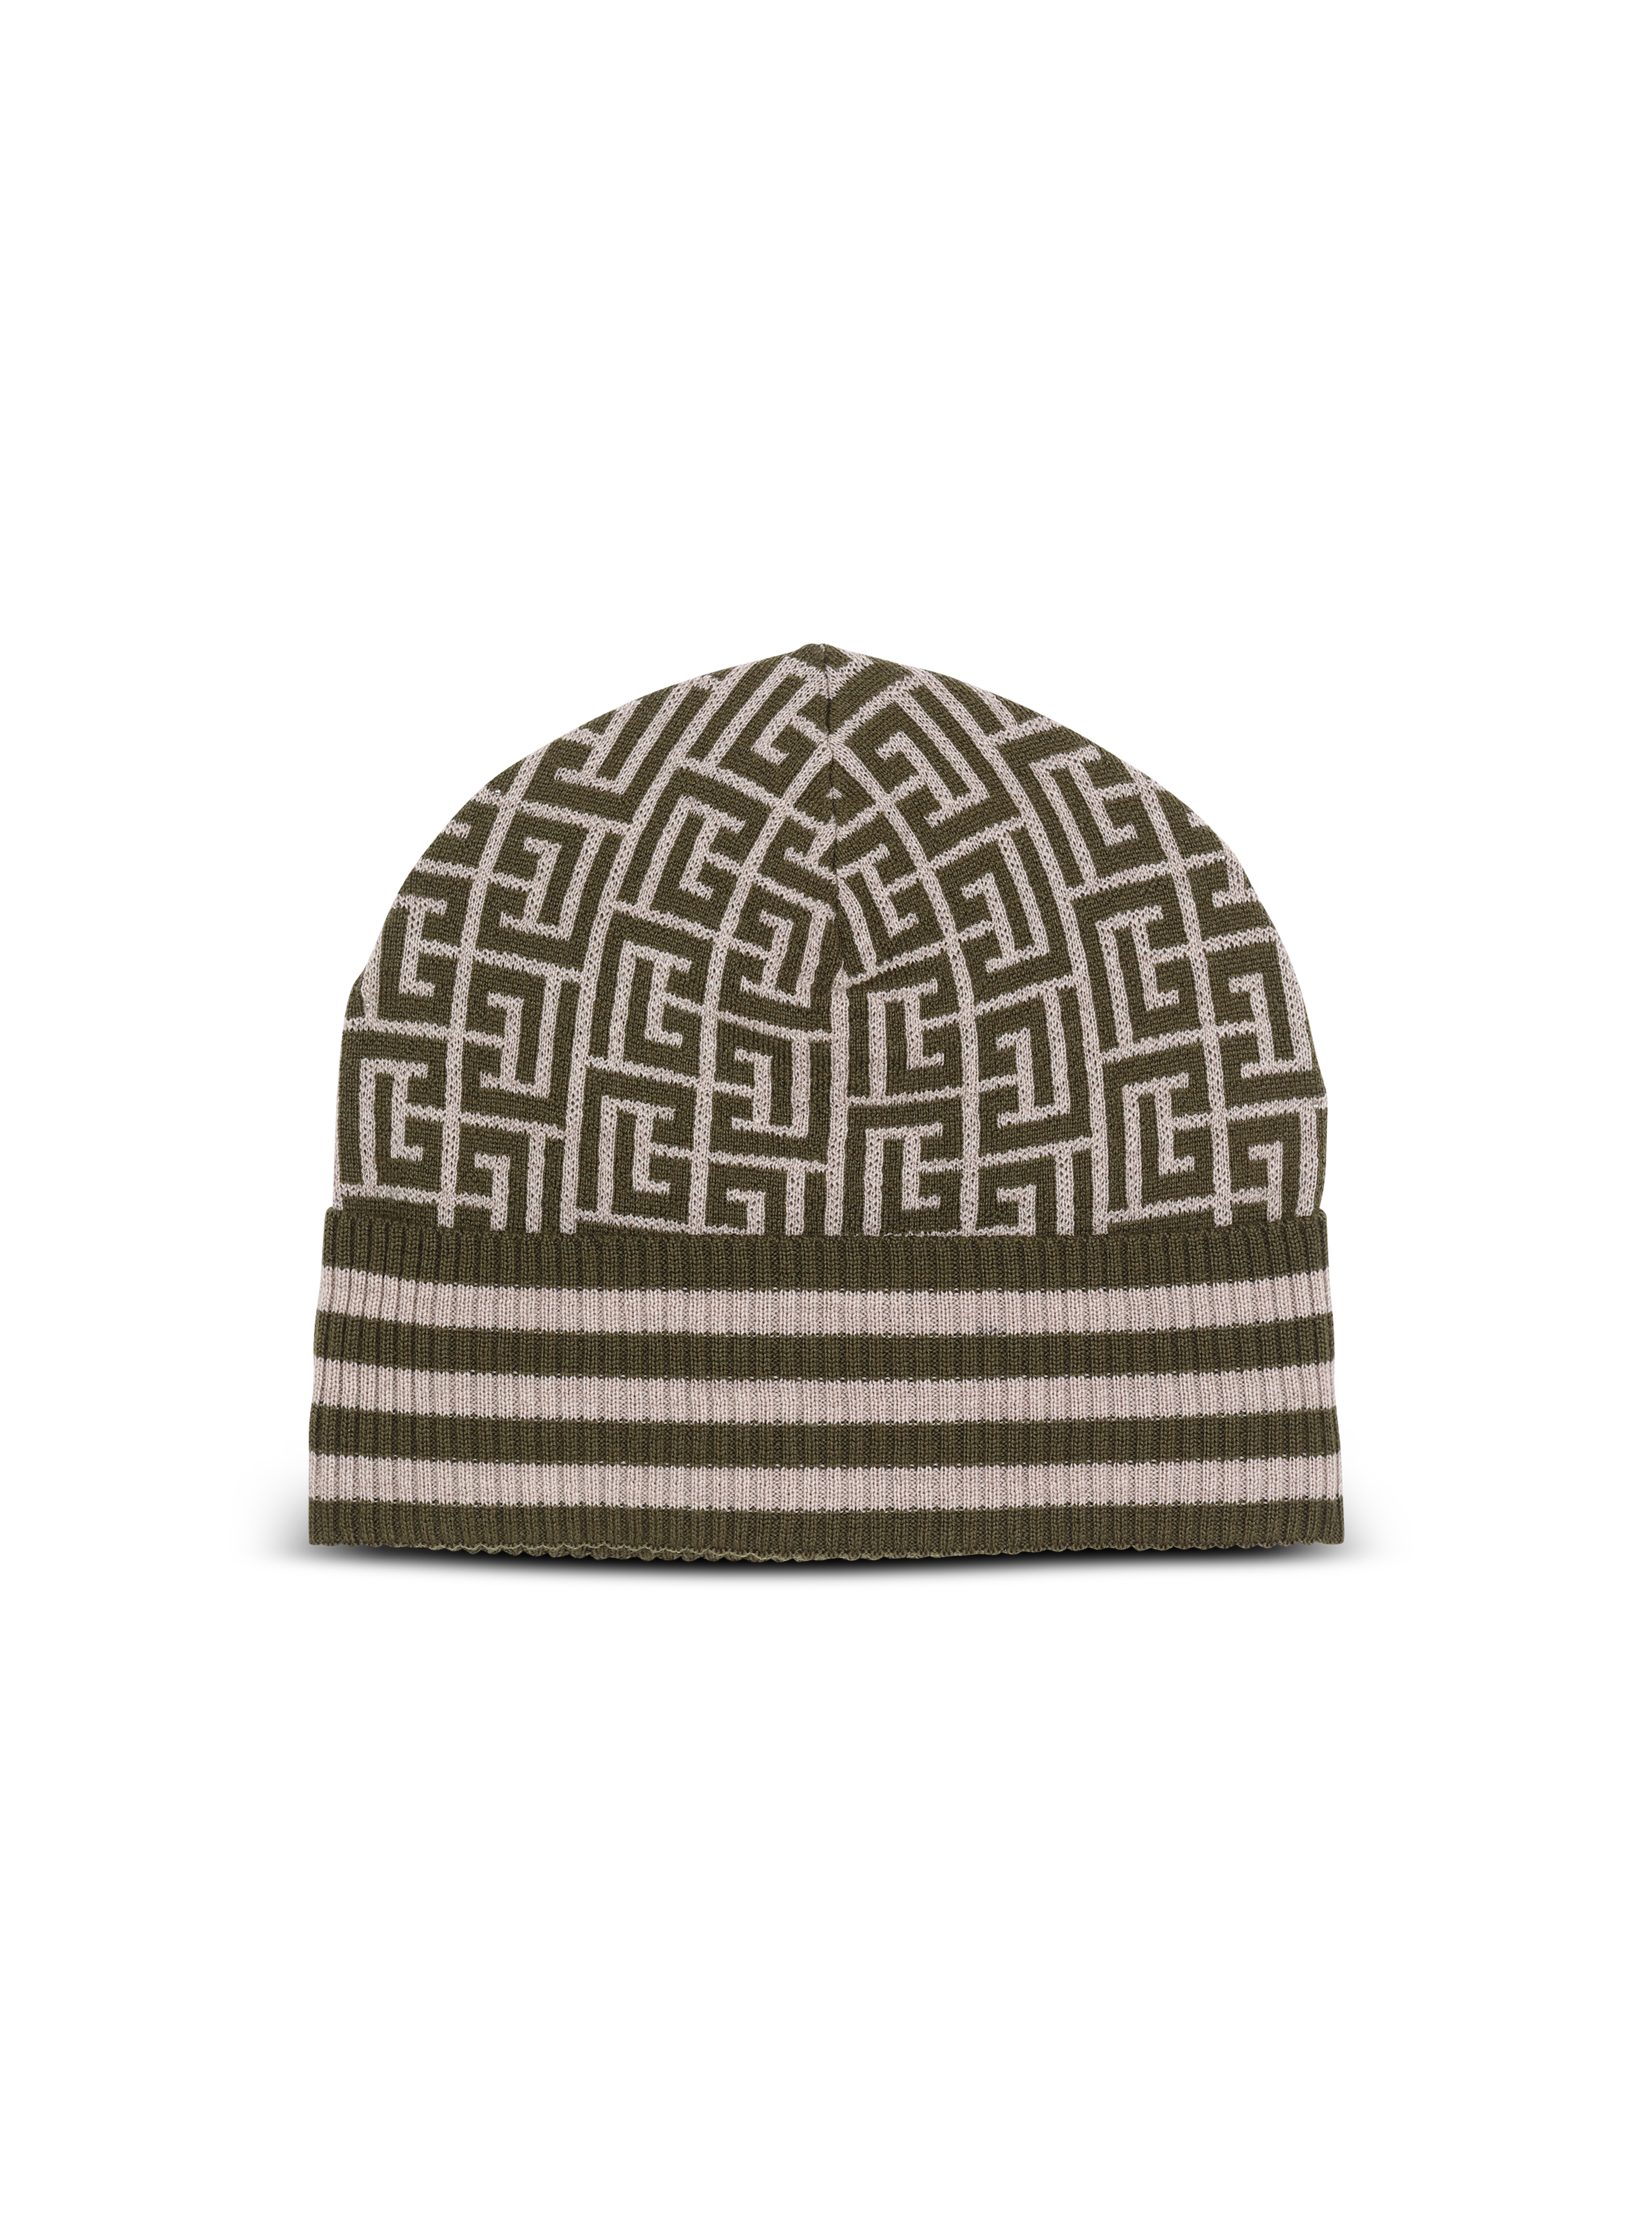 Monogrammed embroidered wool hat, khaki